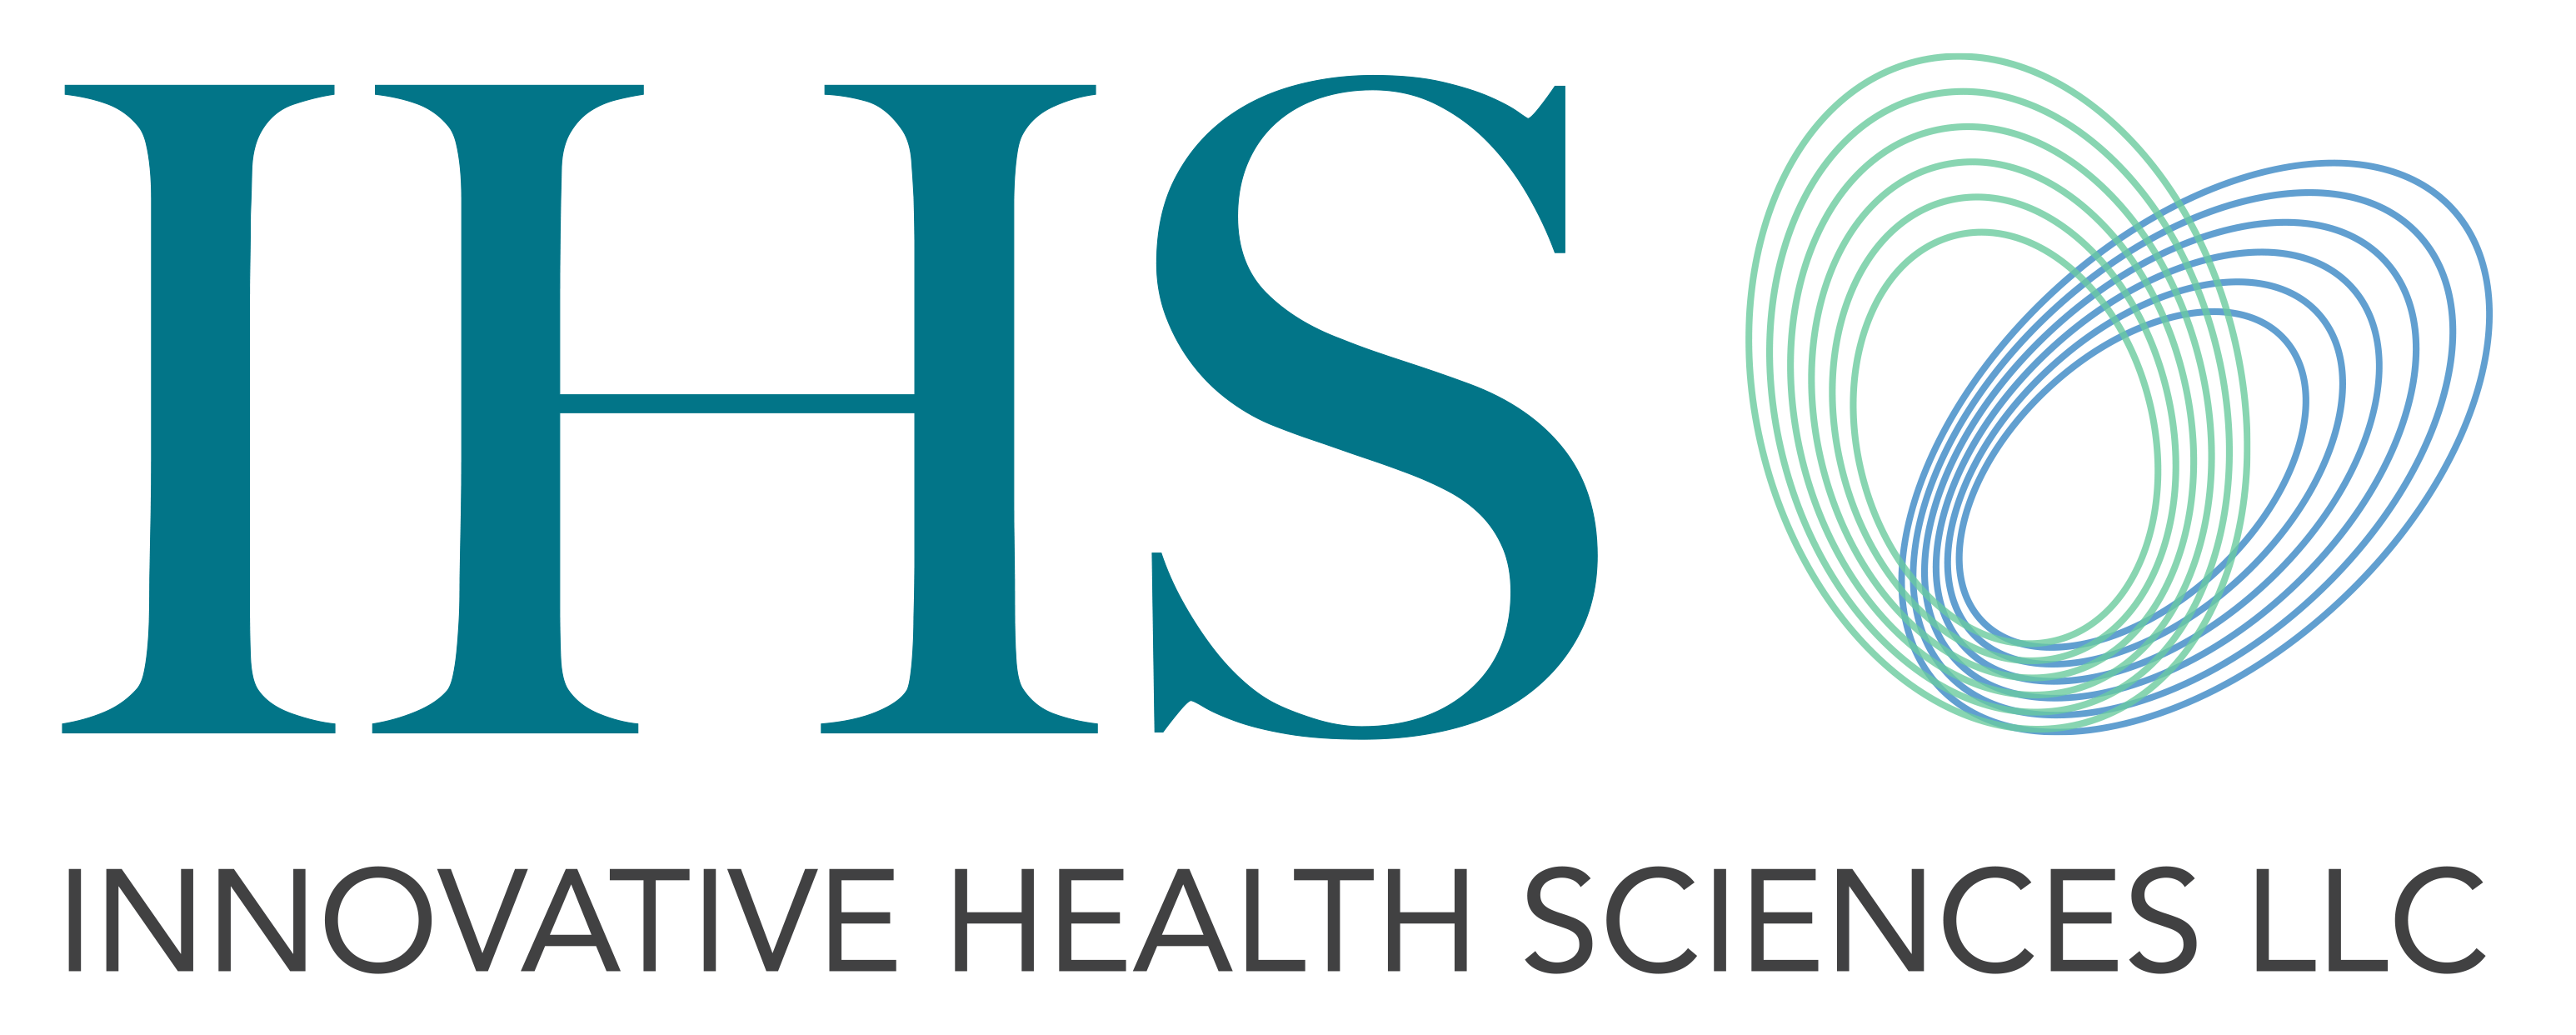 Innovative Health Sciences, LLC